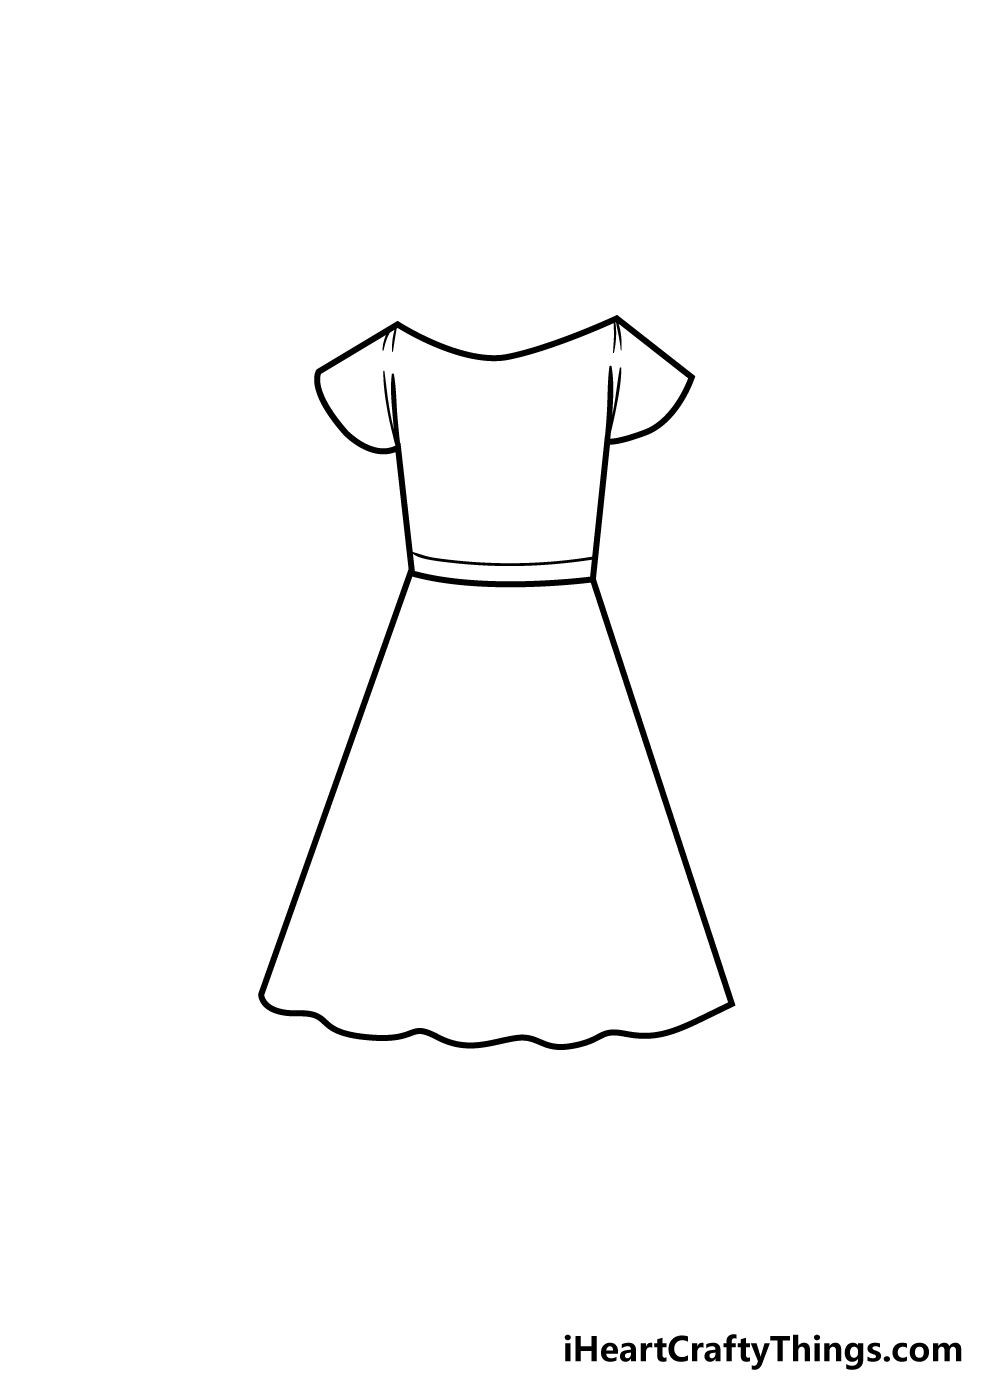 dress drawing step 4